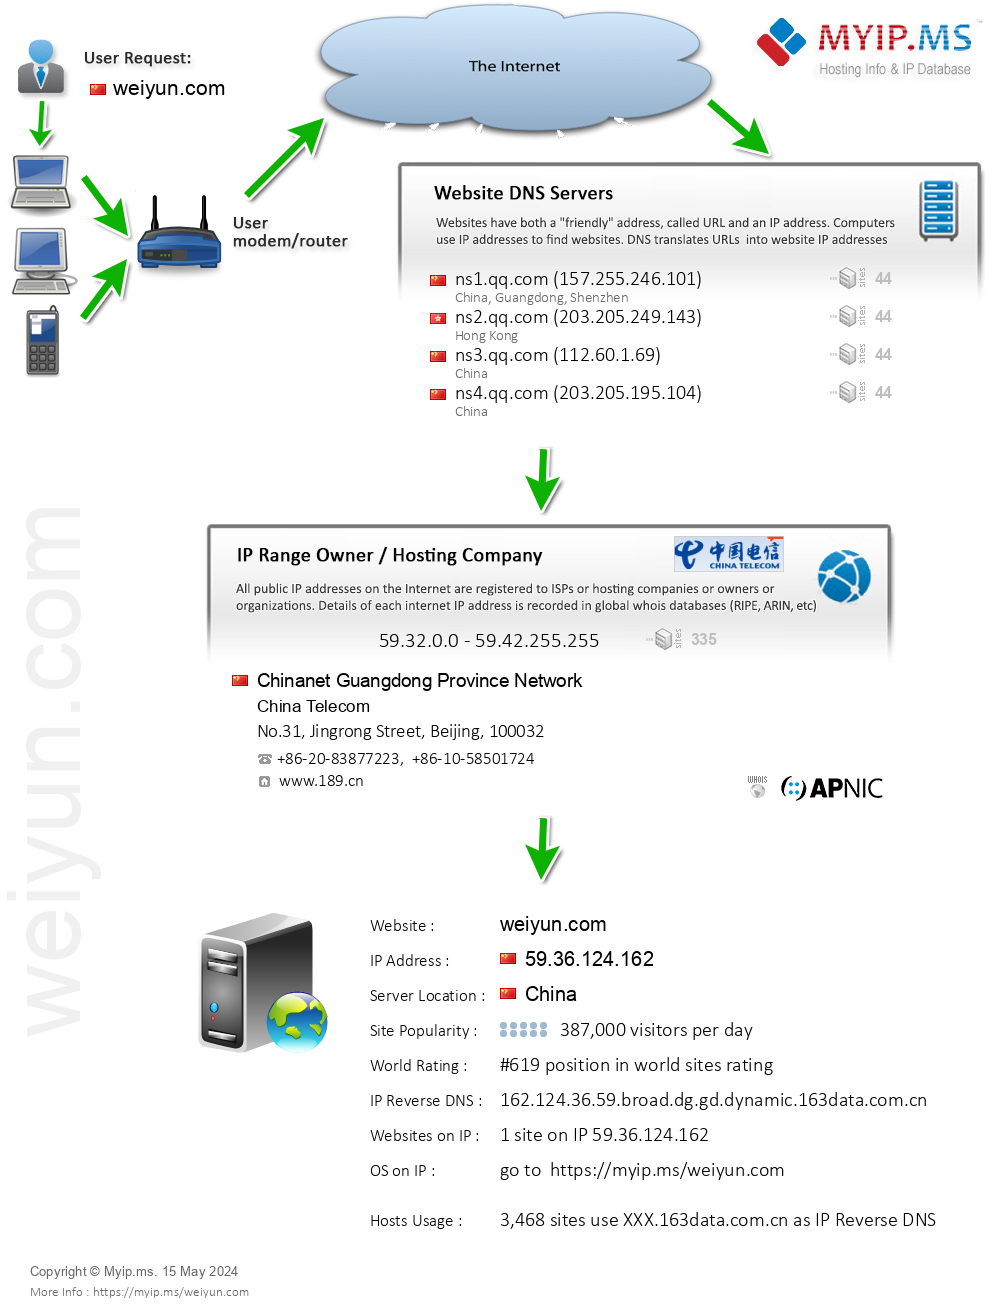 Weiyun.com - Website Hosting Visual IP Diagram